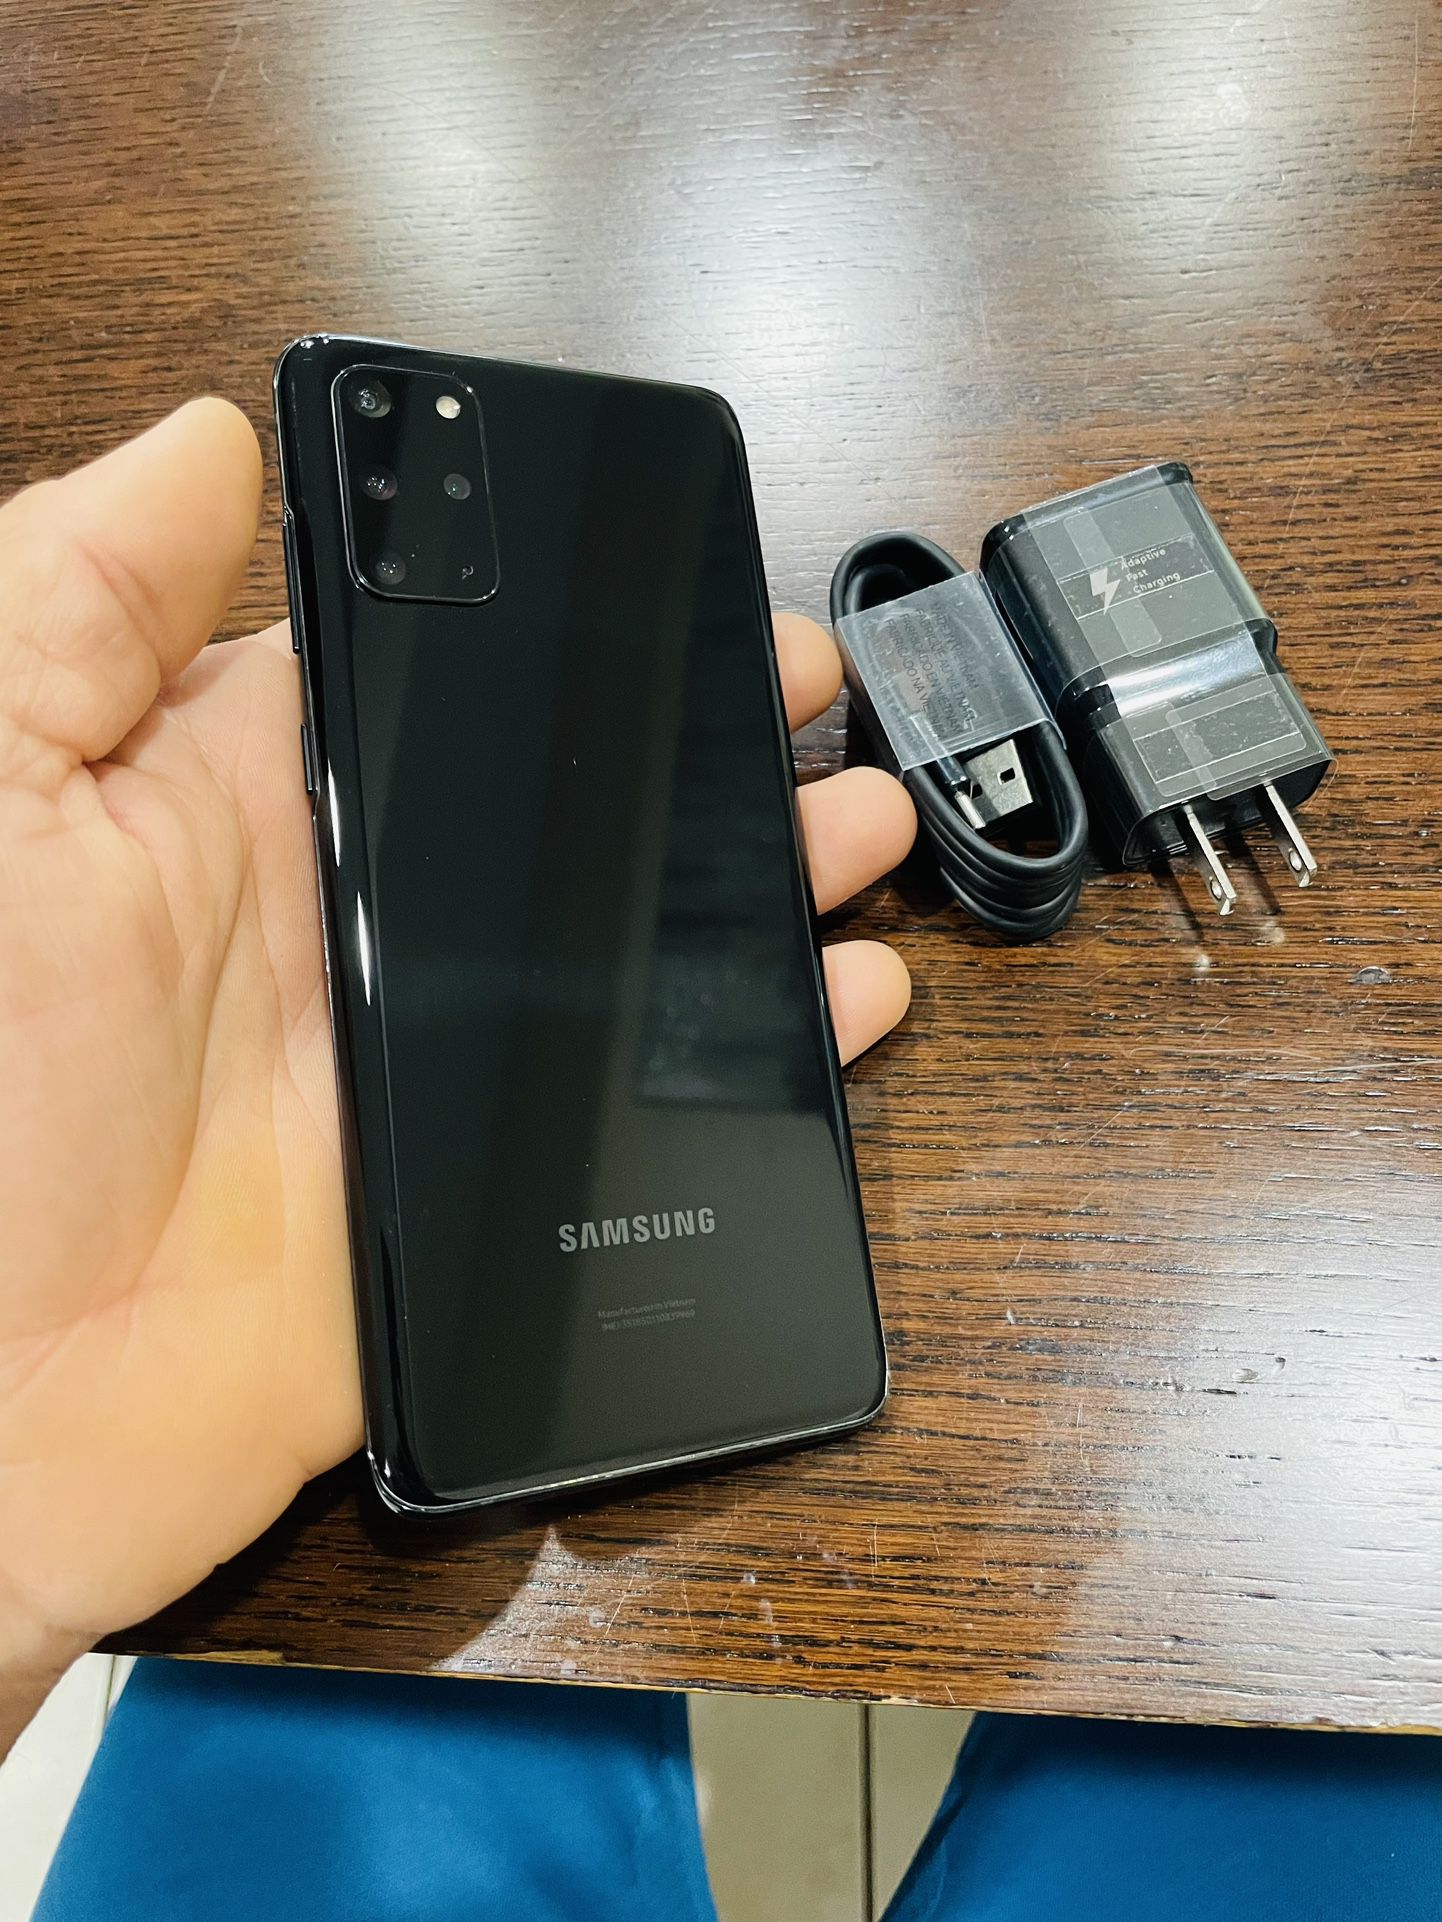 Samsung Galaxy S20 Plus Black 128gb Unlocked. Firm Price